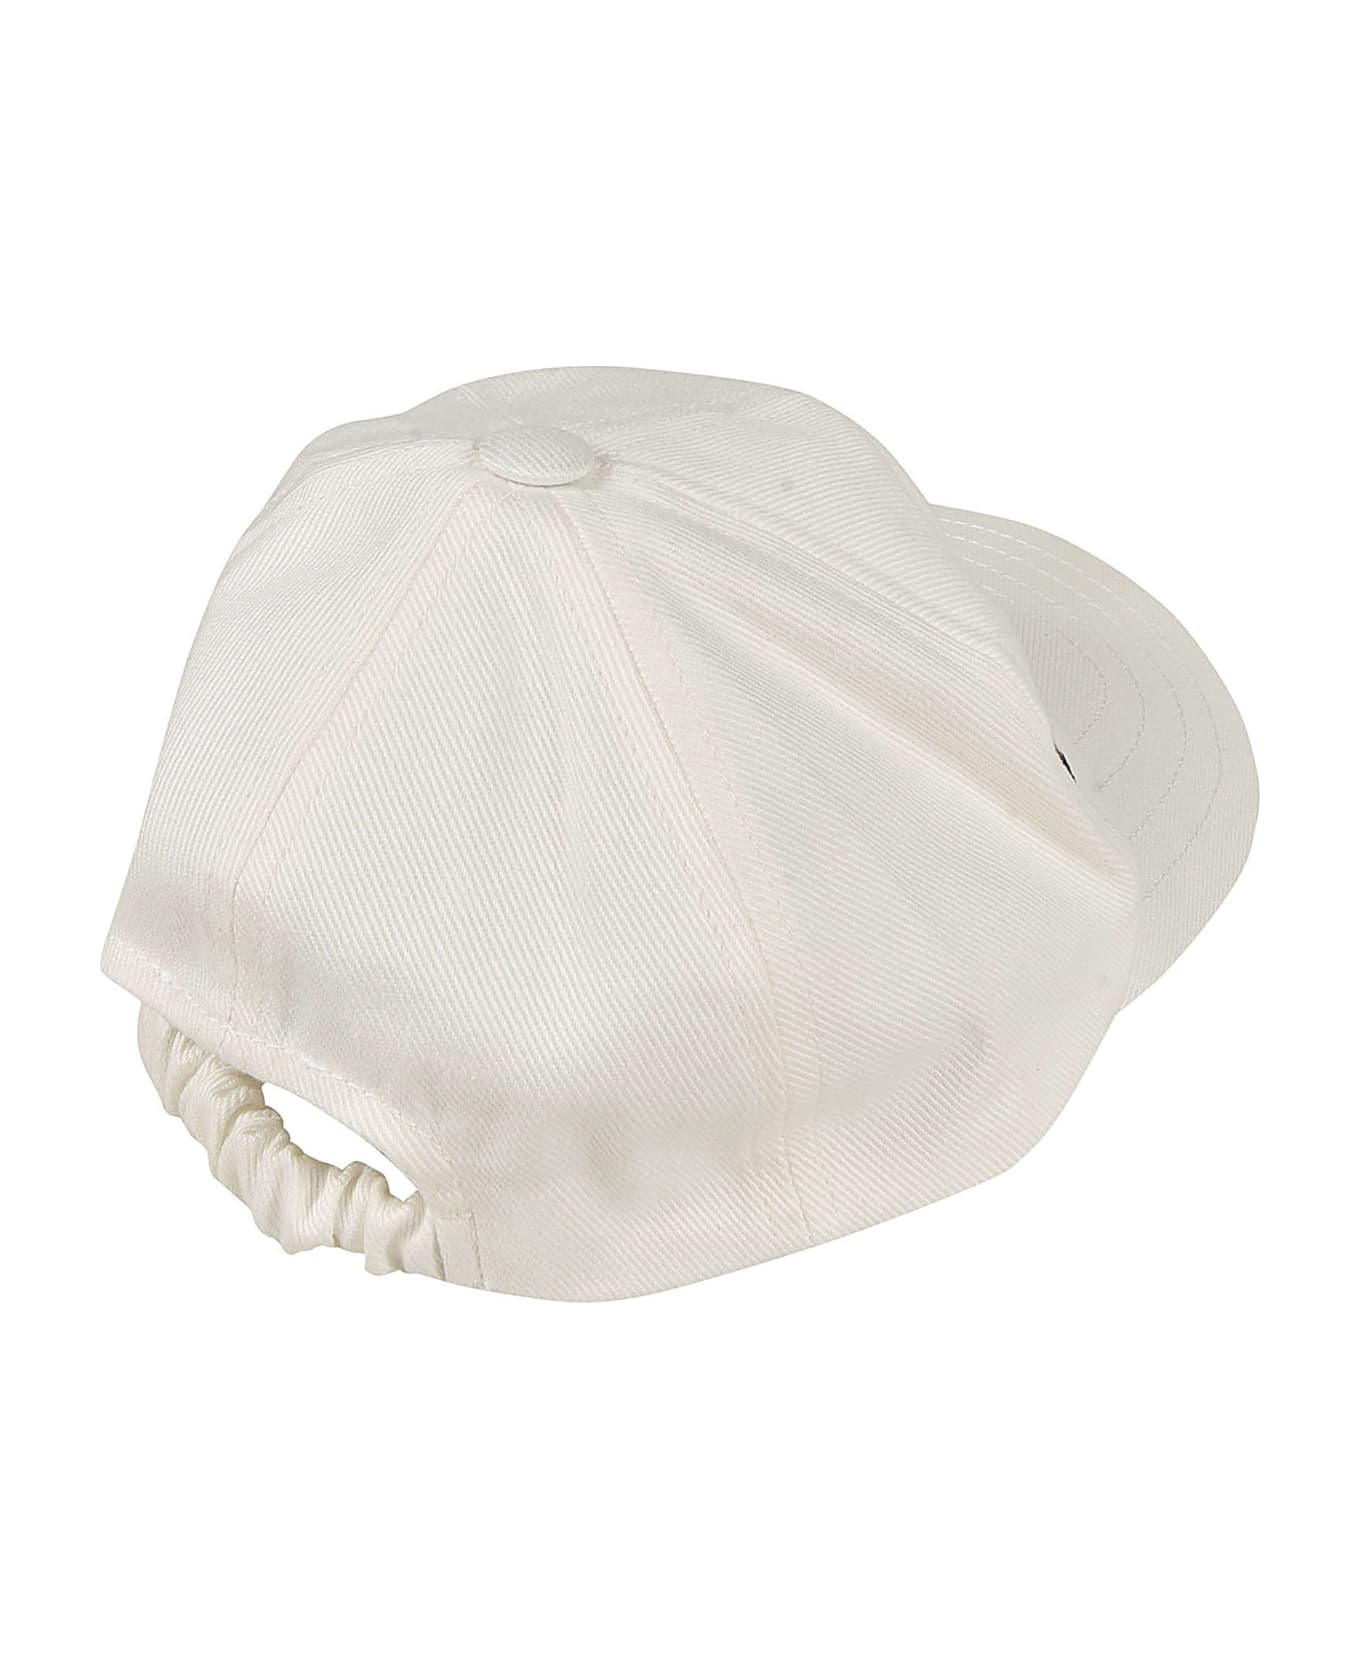 Patou Logo Baseball Cap - Cream 帽子